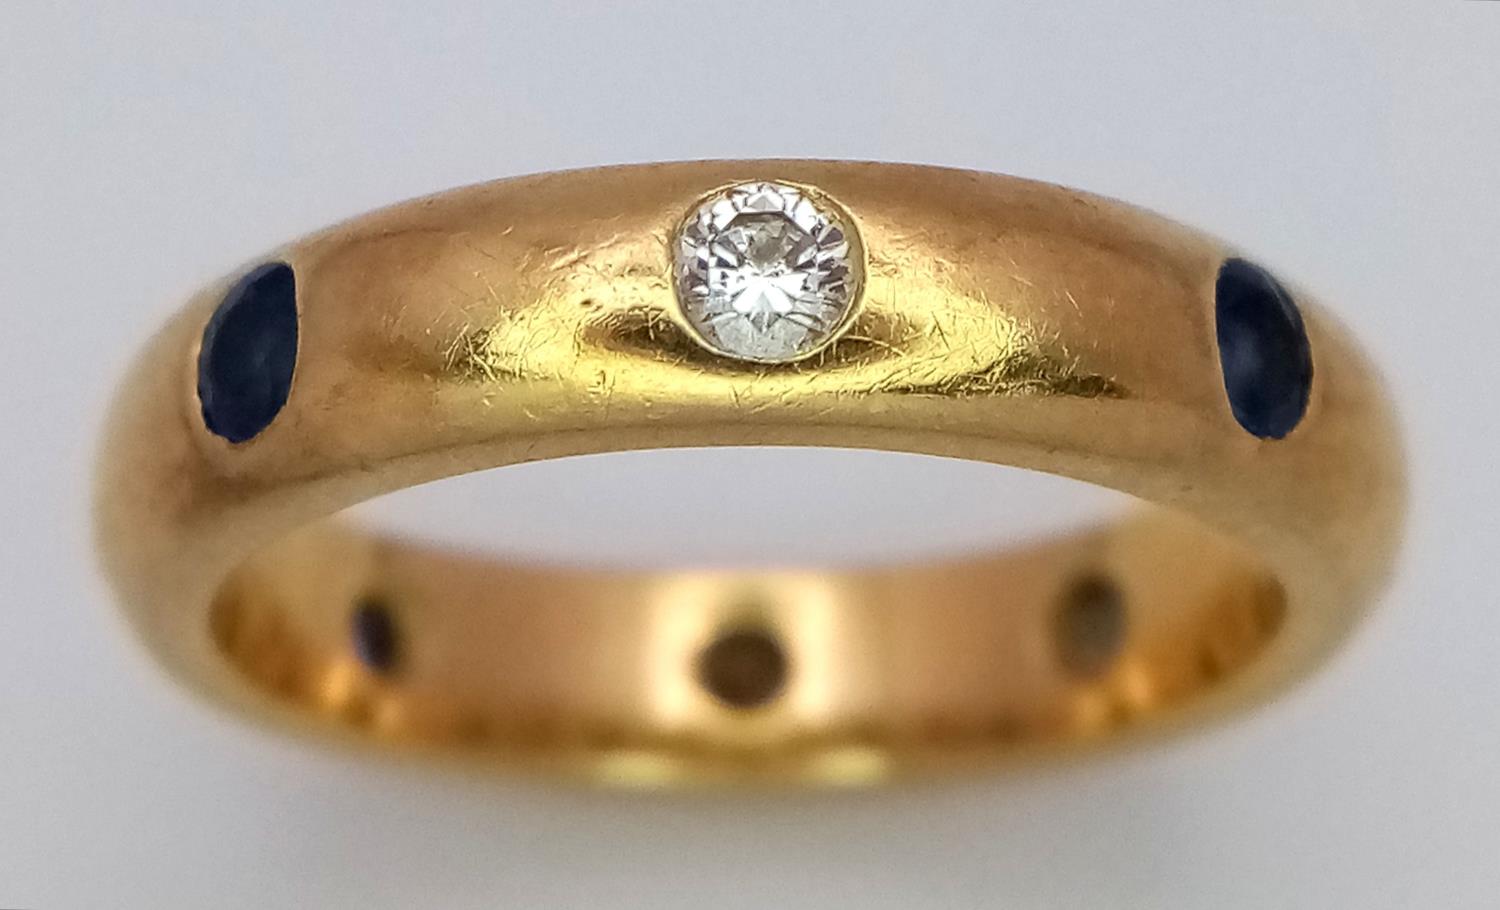 A 18K YELLOW GOLD DIAMOND & SAPPHIRE SET BAND RING 0.20CT DIAMONDS & 0.25CT SAPPHIRES 5.5G SIZE K. - Image 2 of 5